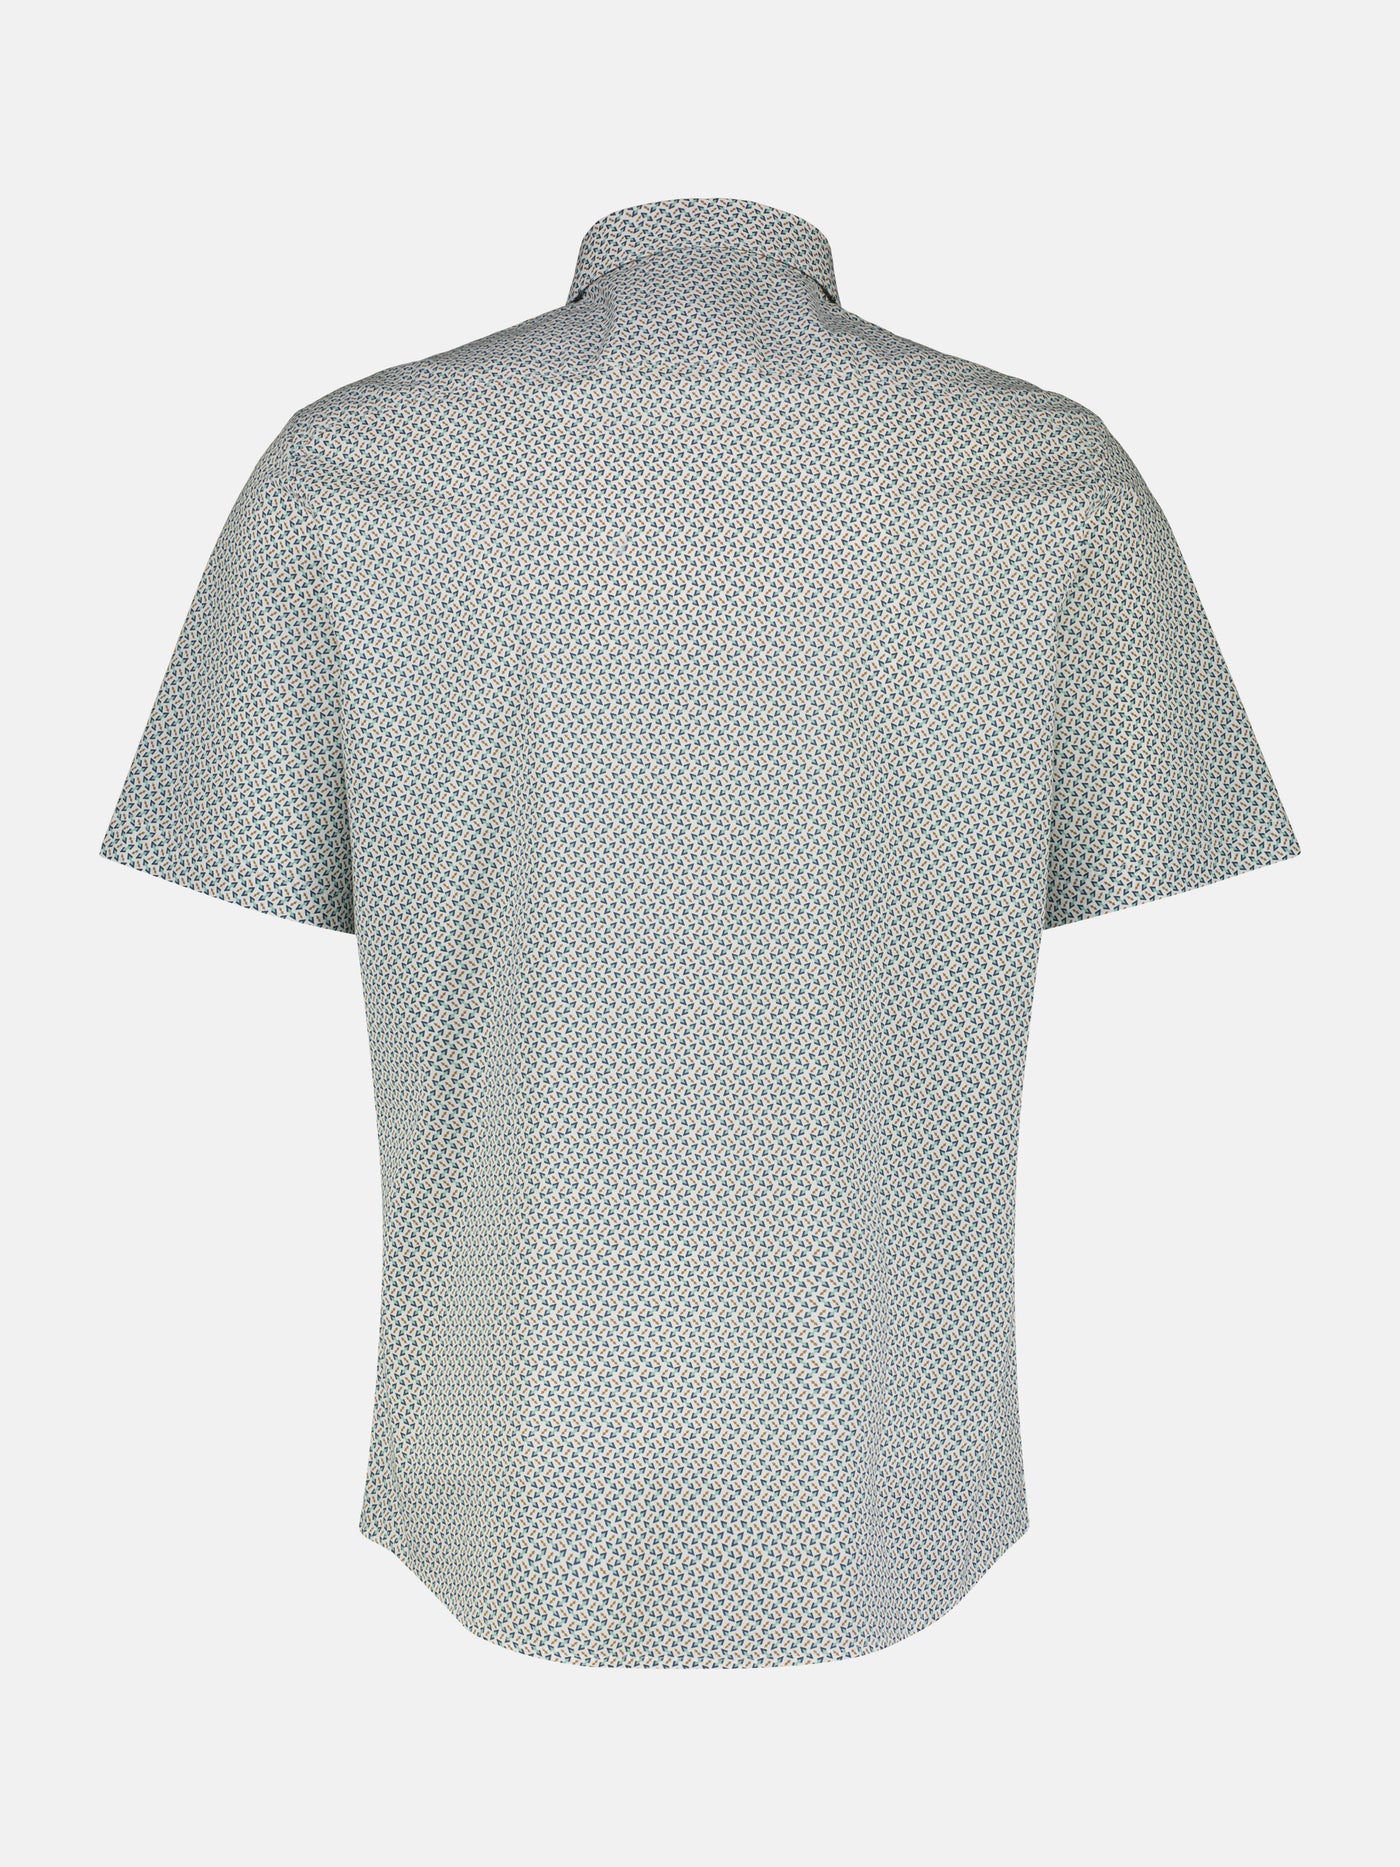 Half sleeve shirt with geometric print